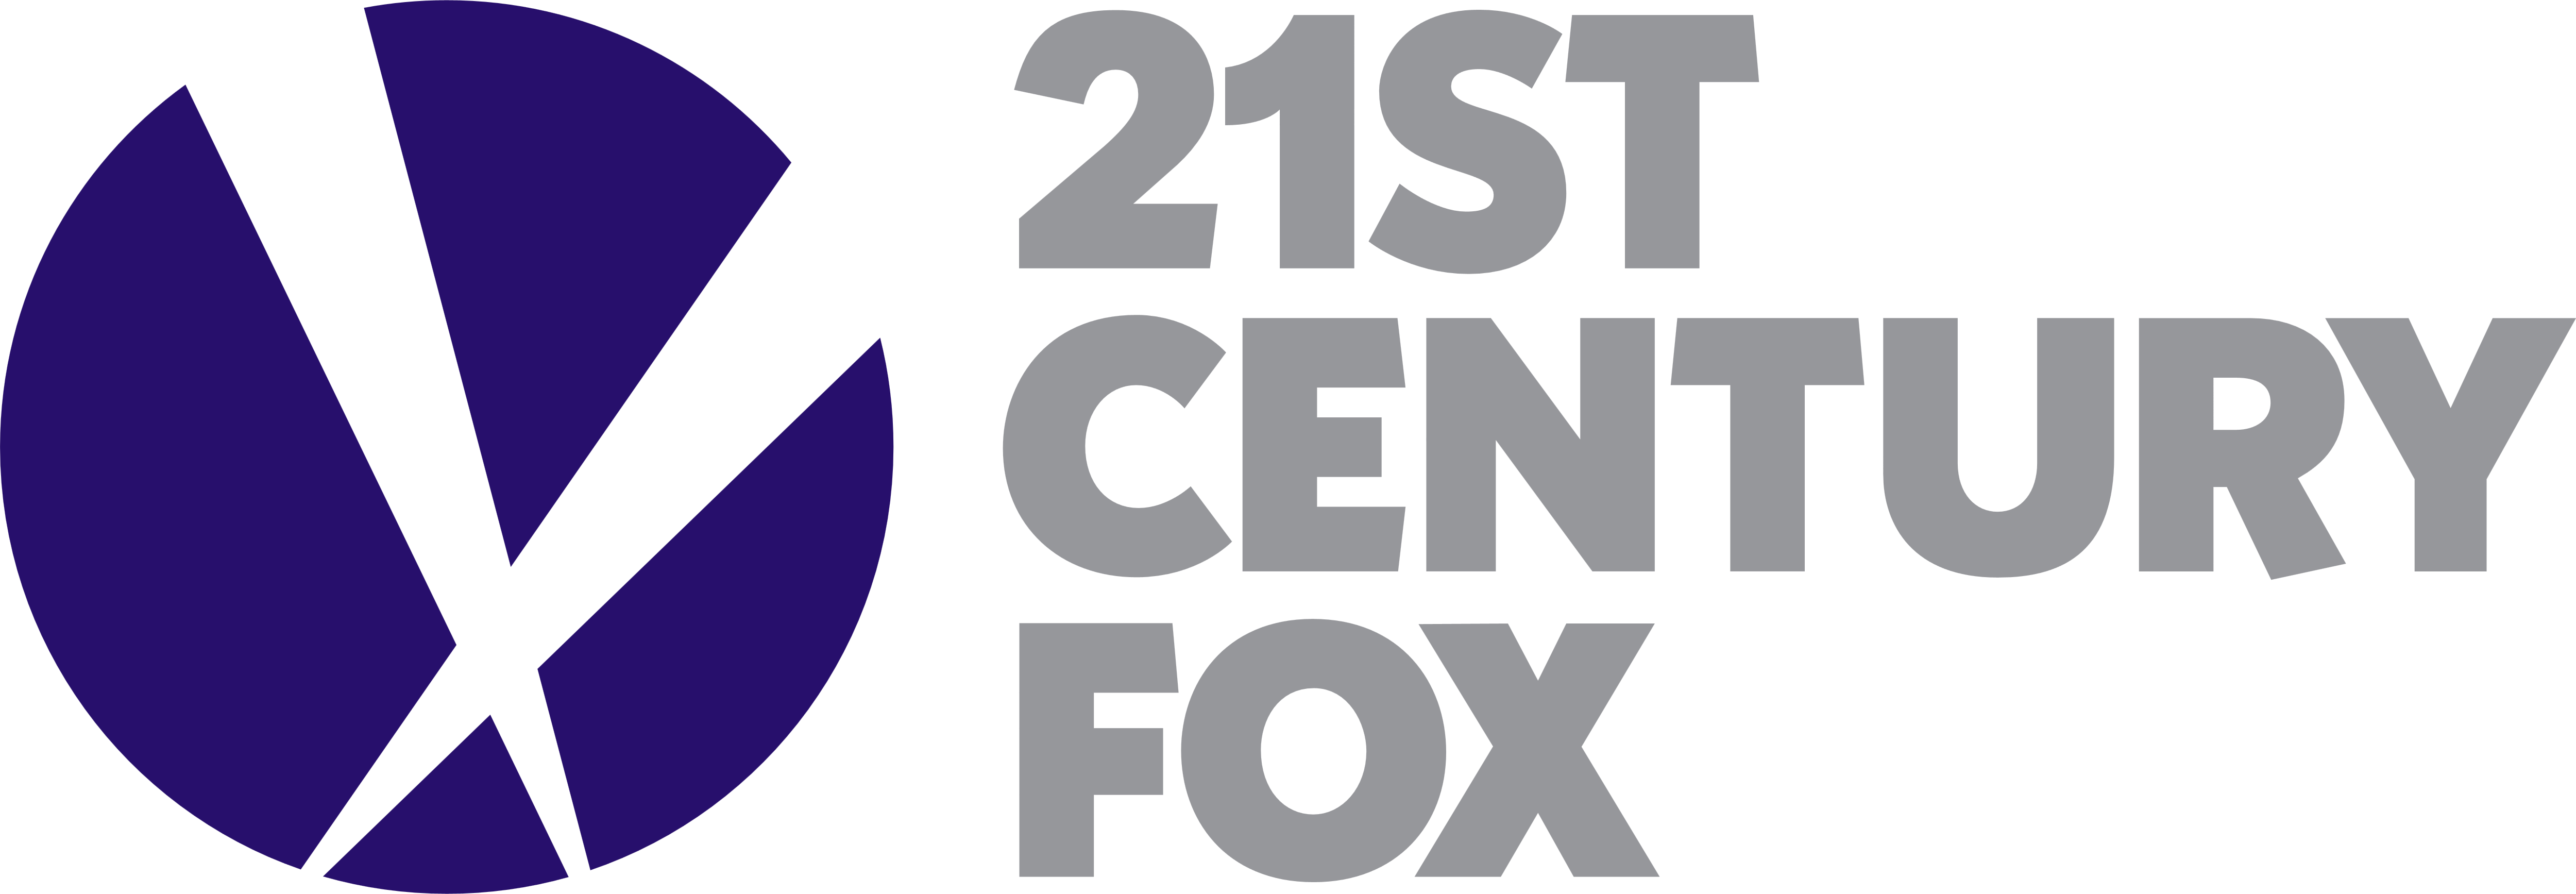 21st century fox png logo #4376